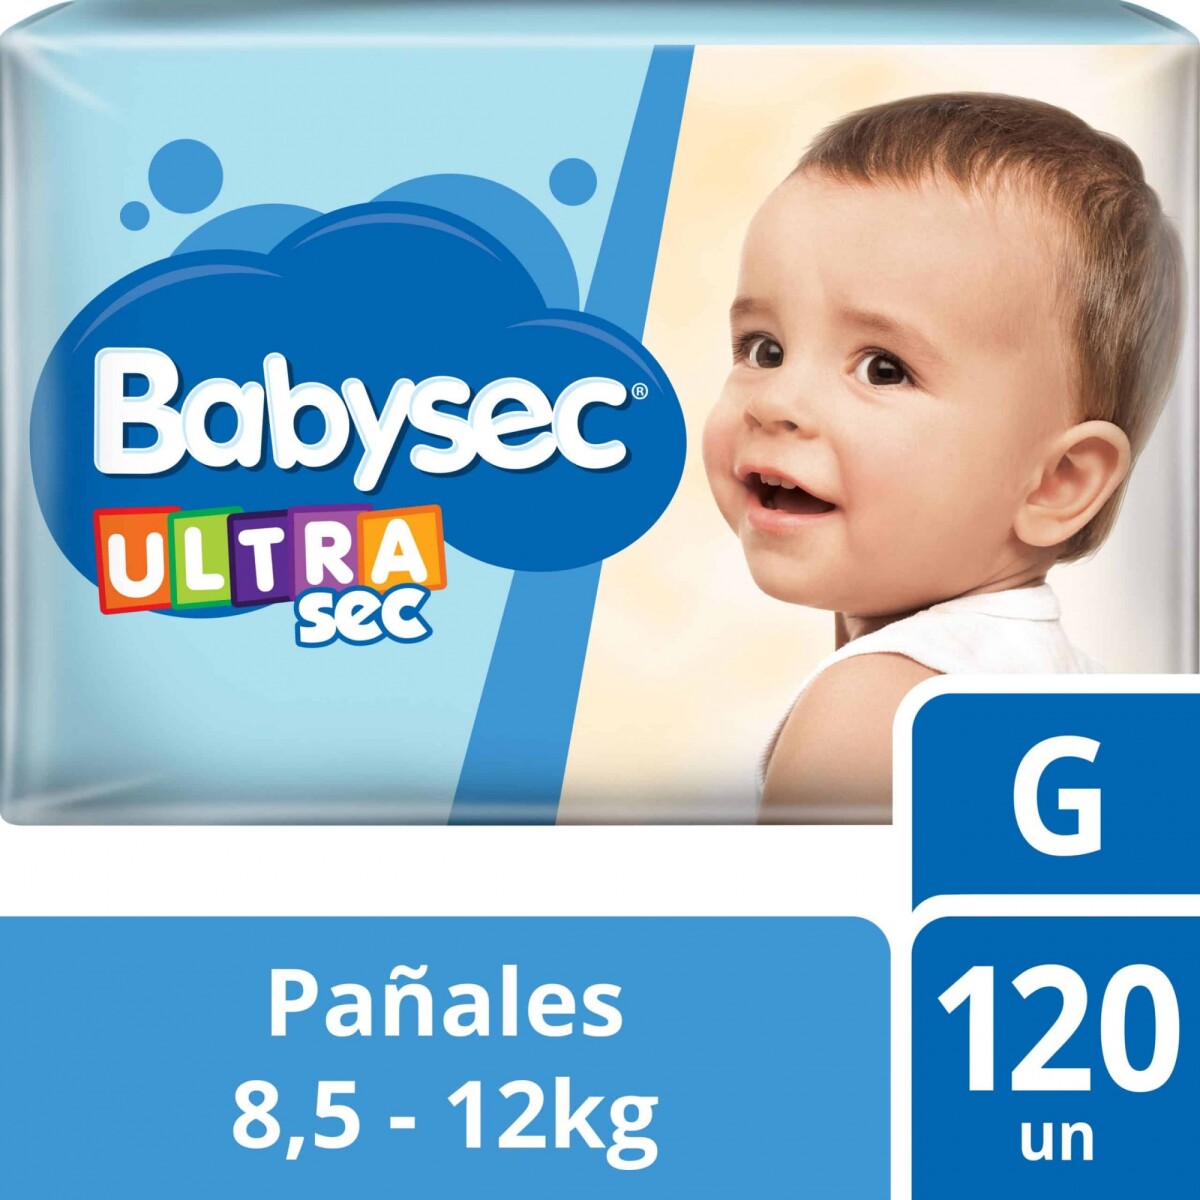 Pañales Babysec Ultrasec G X 120 